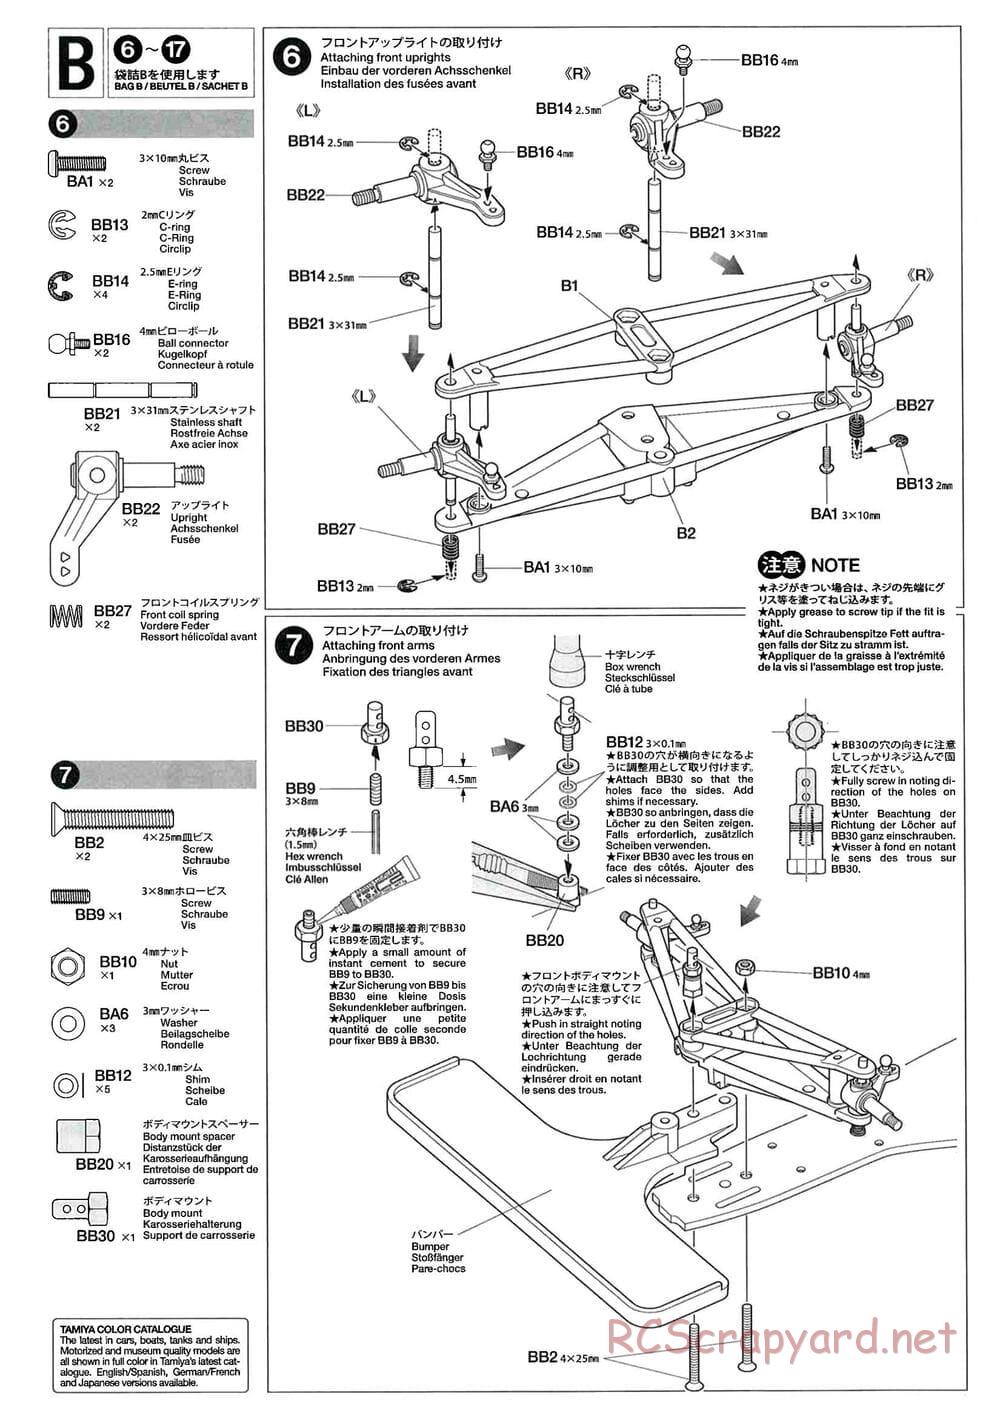 Tamiya - F104W Chassis - Manual - Page 6